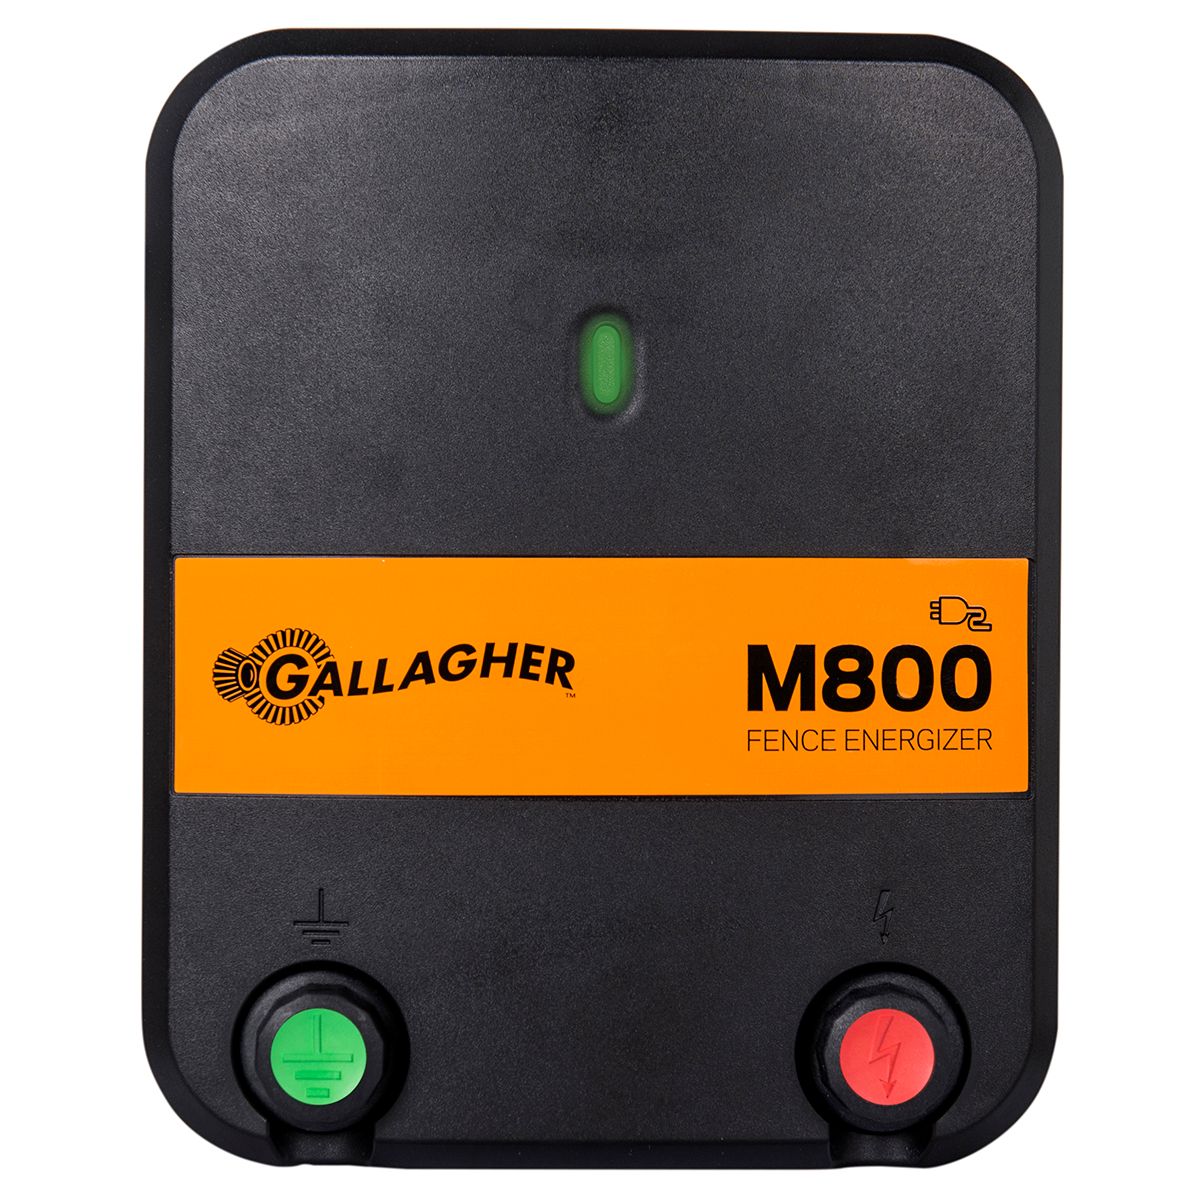 Gallagher M800 Fence Energizer